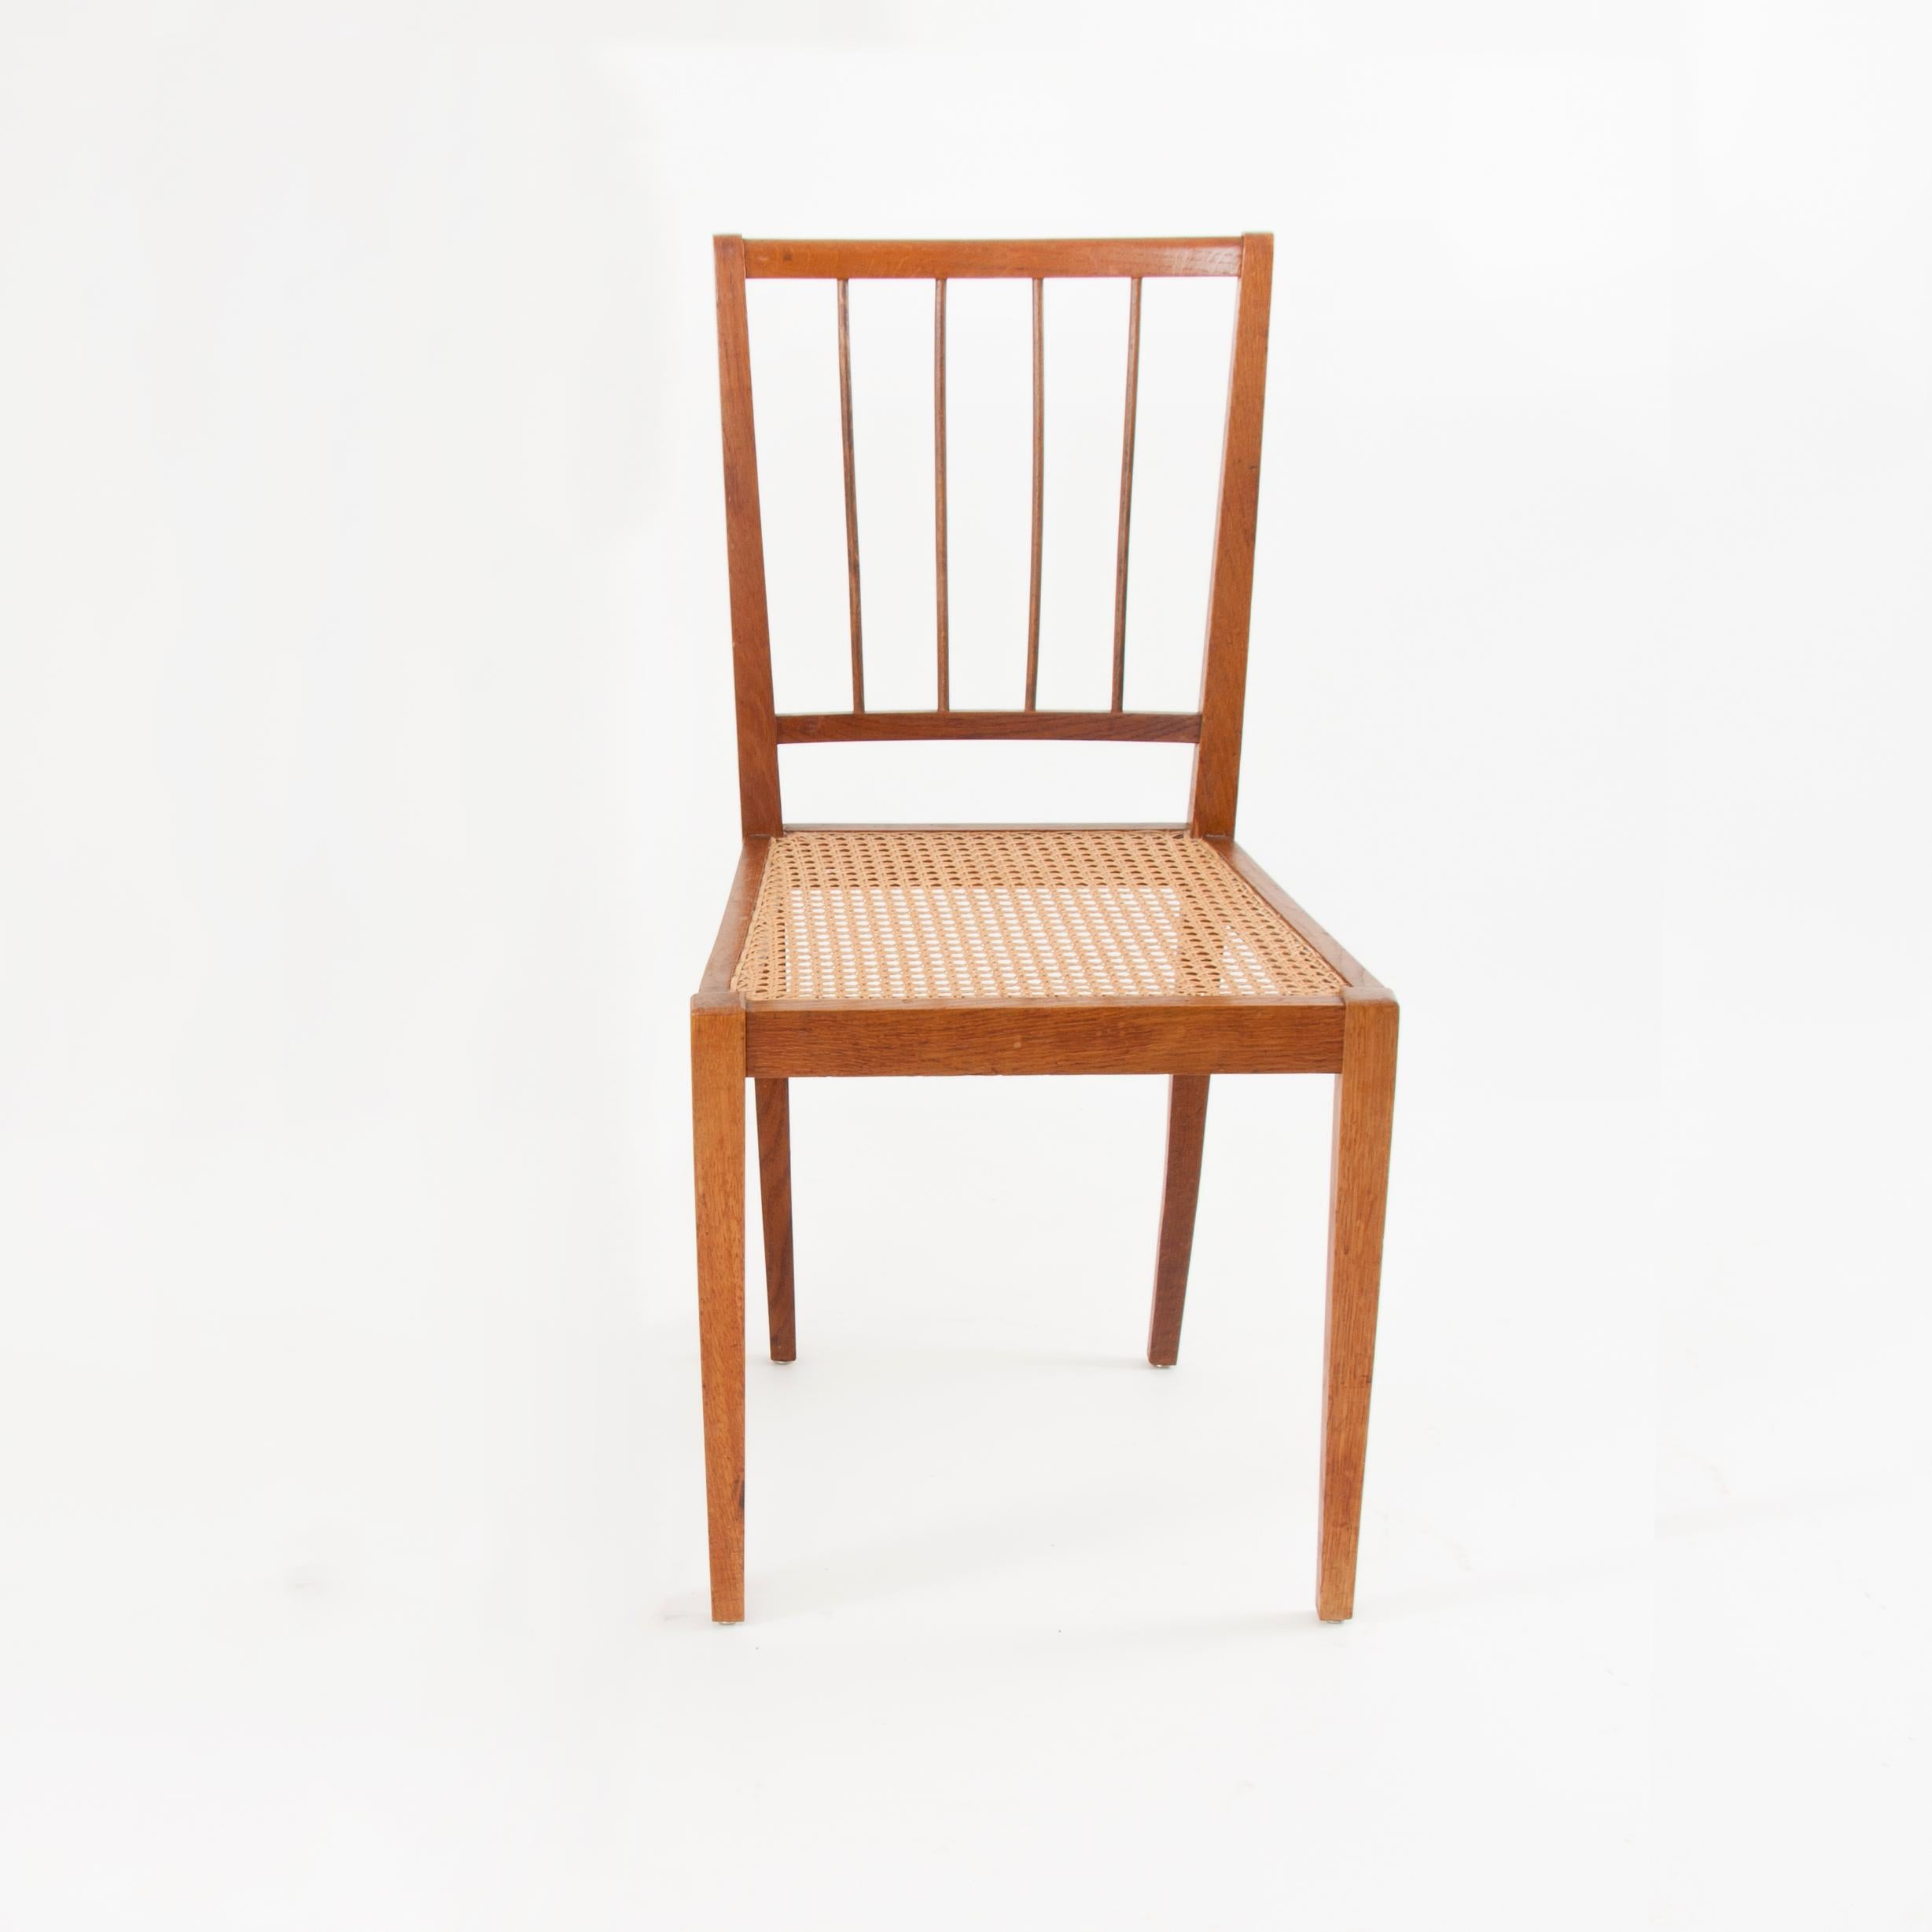 Two Elegant Werkstätte Hagenauer Chairs M006 by Julius Jirasek, Austria, 1930 For Sale 7